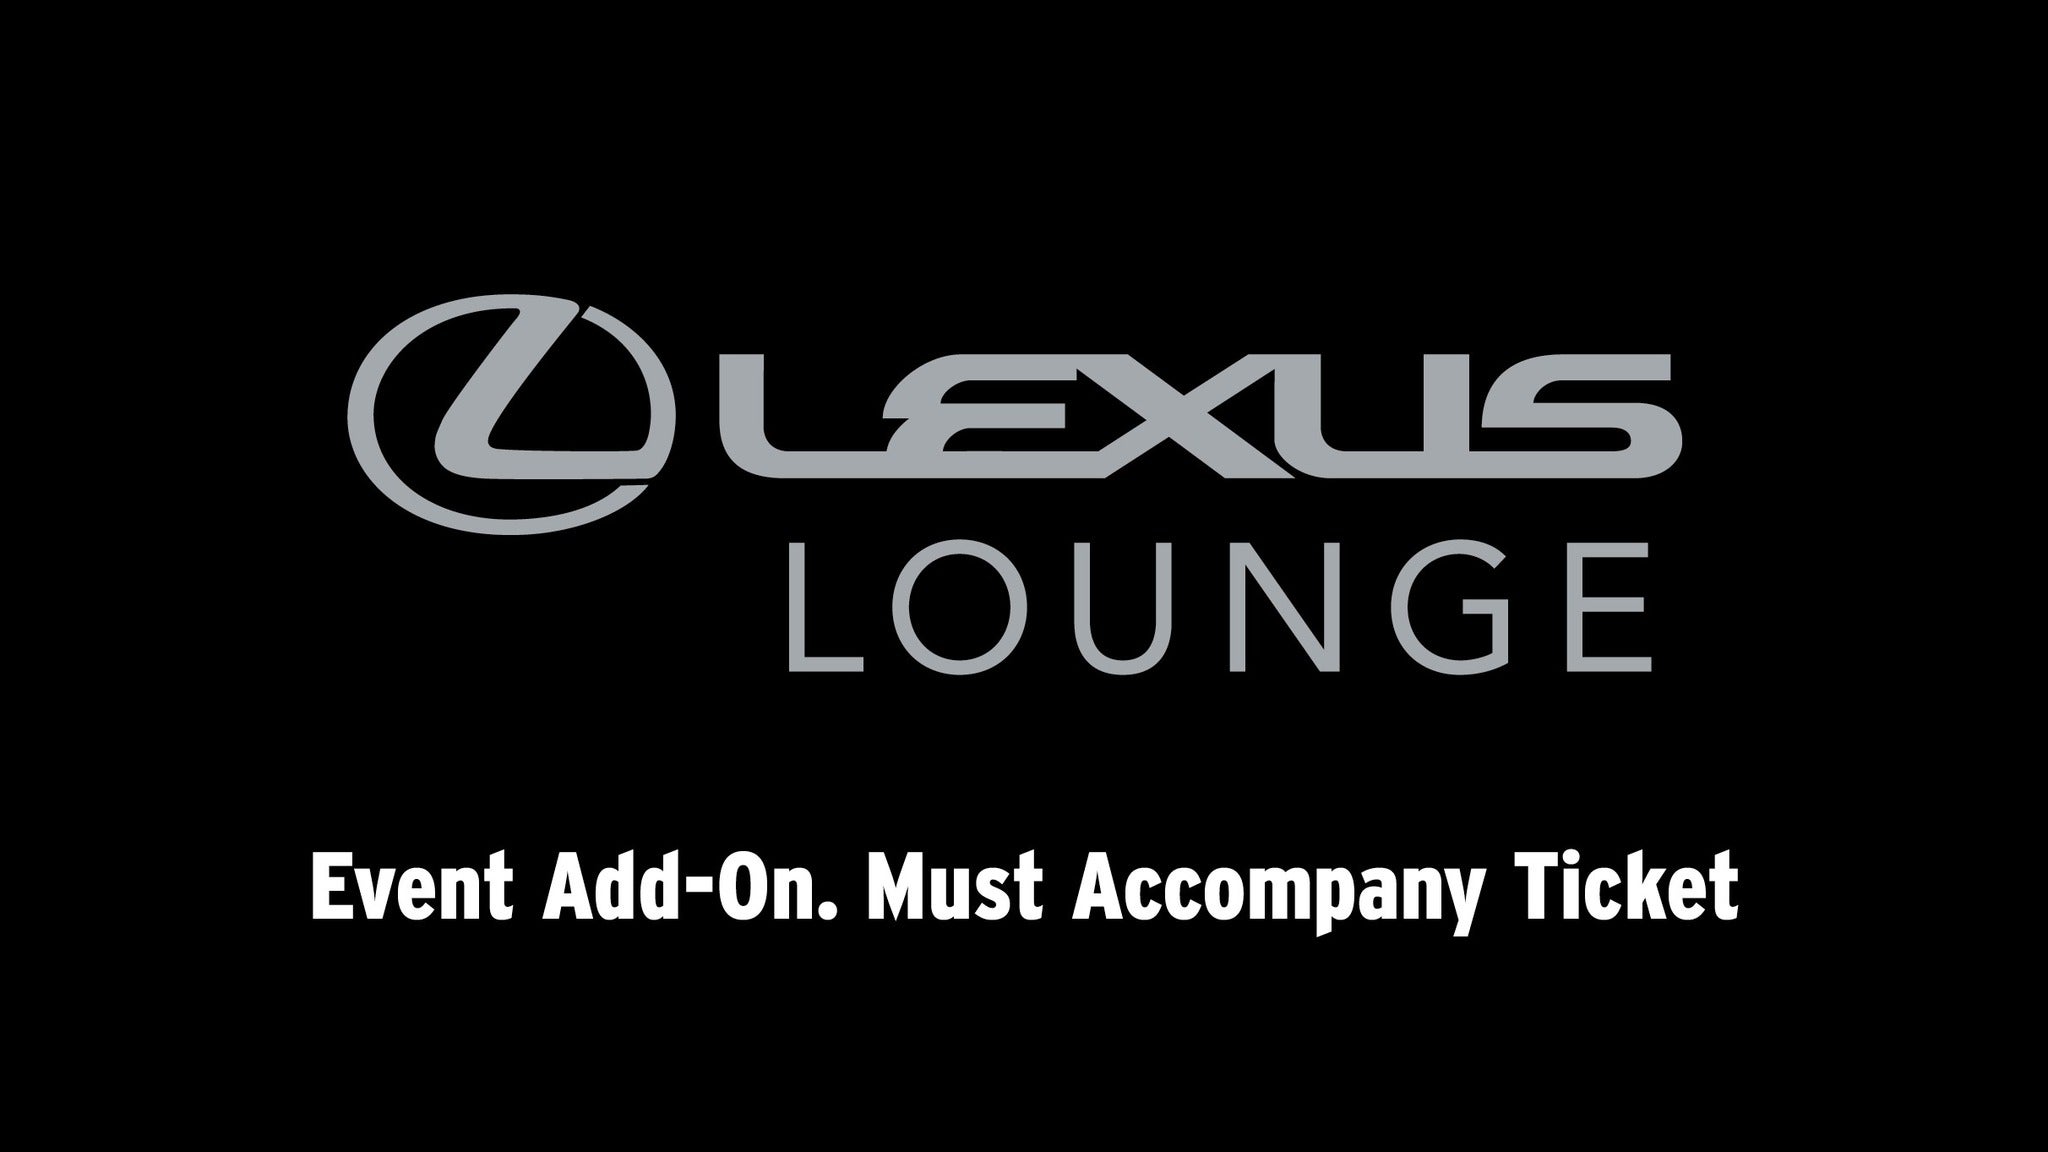 Lexus Lounge Access Tickets Event Dates & Schedule